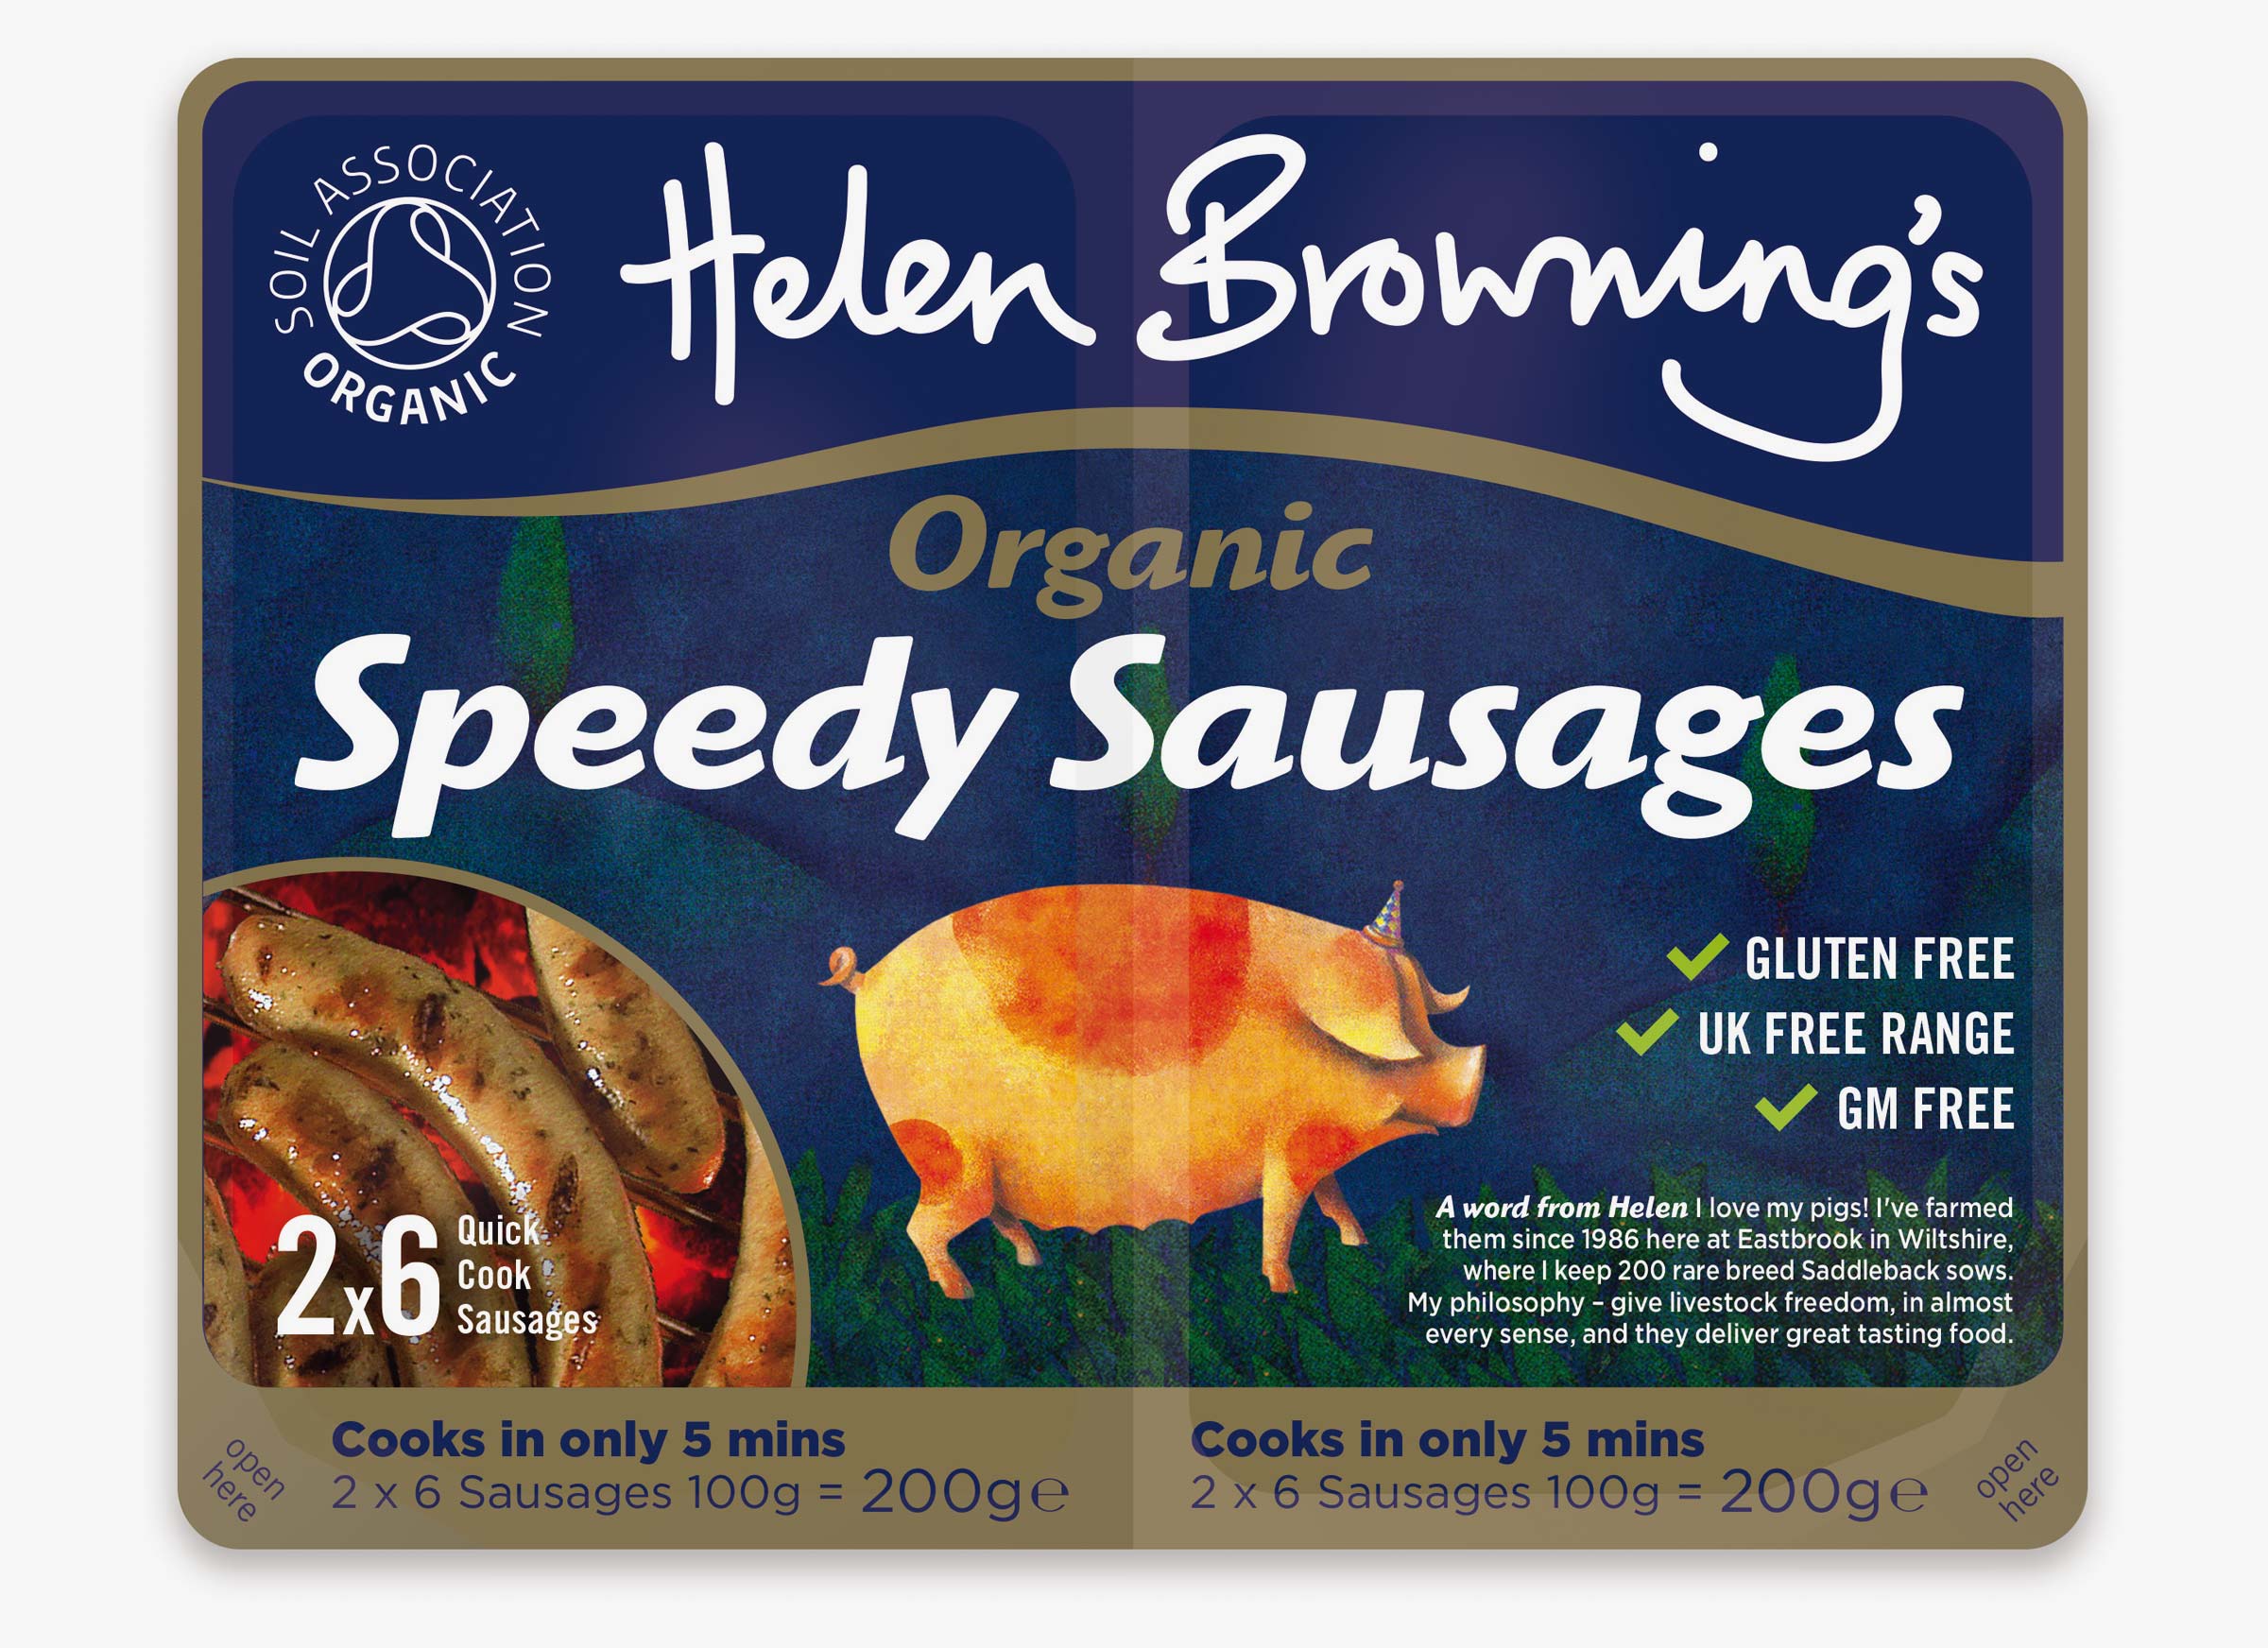 Helen Browning's Organic Speedy Sausages